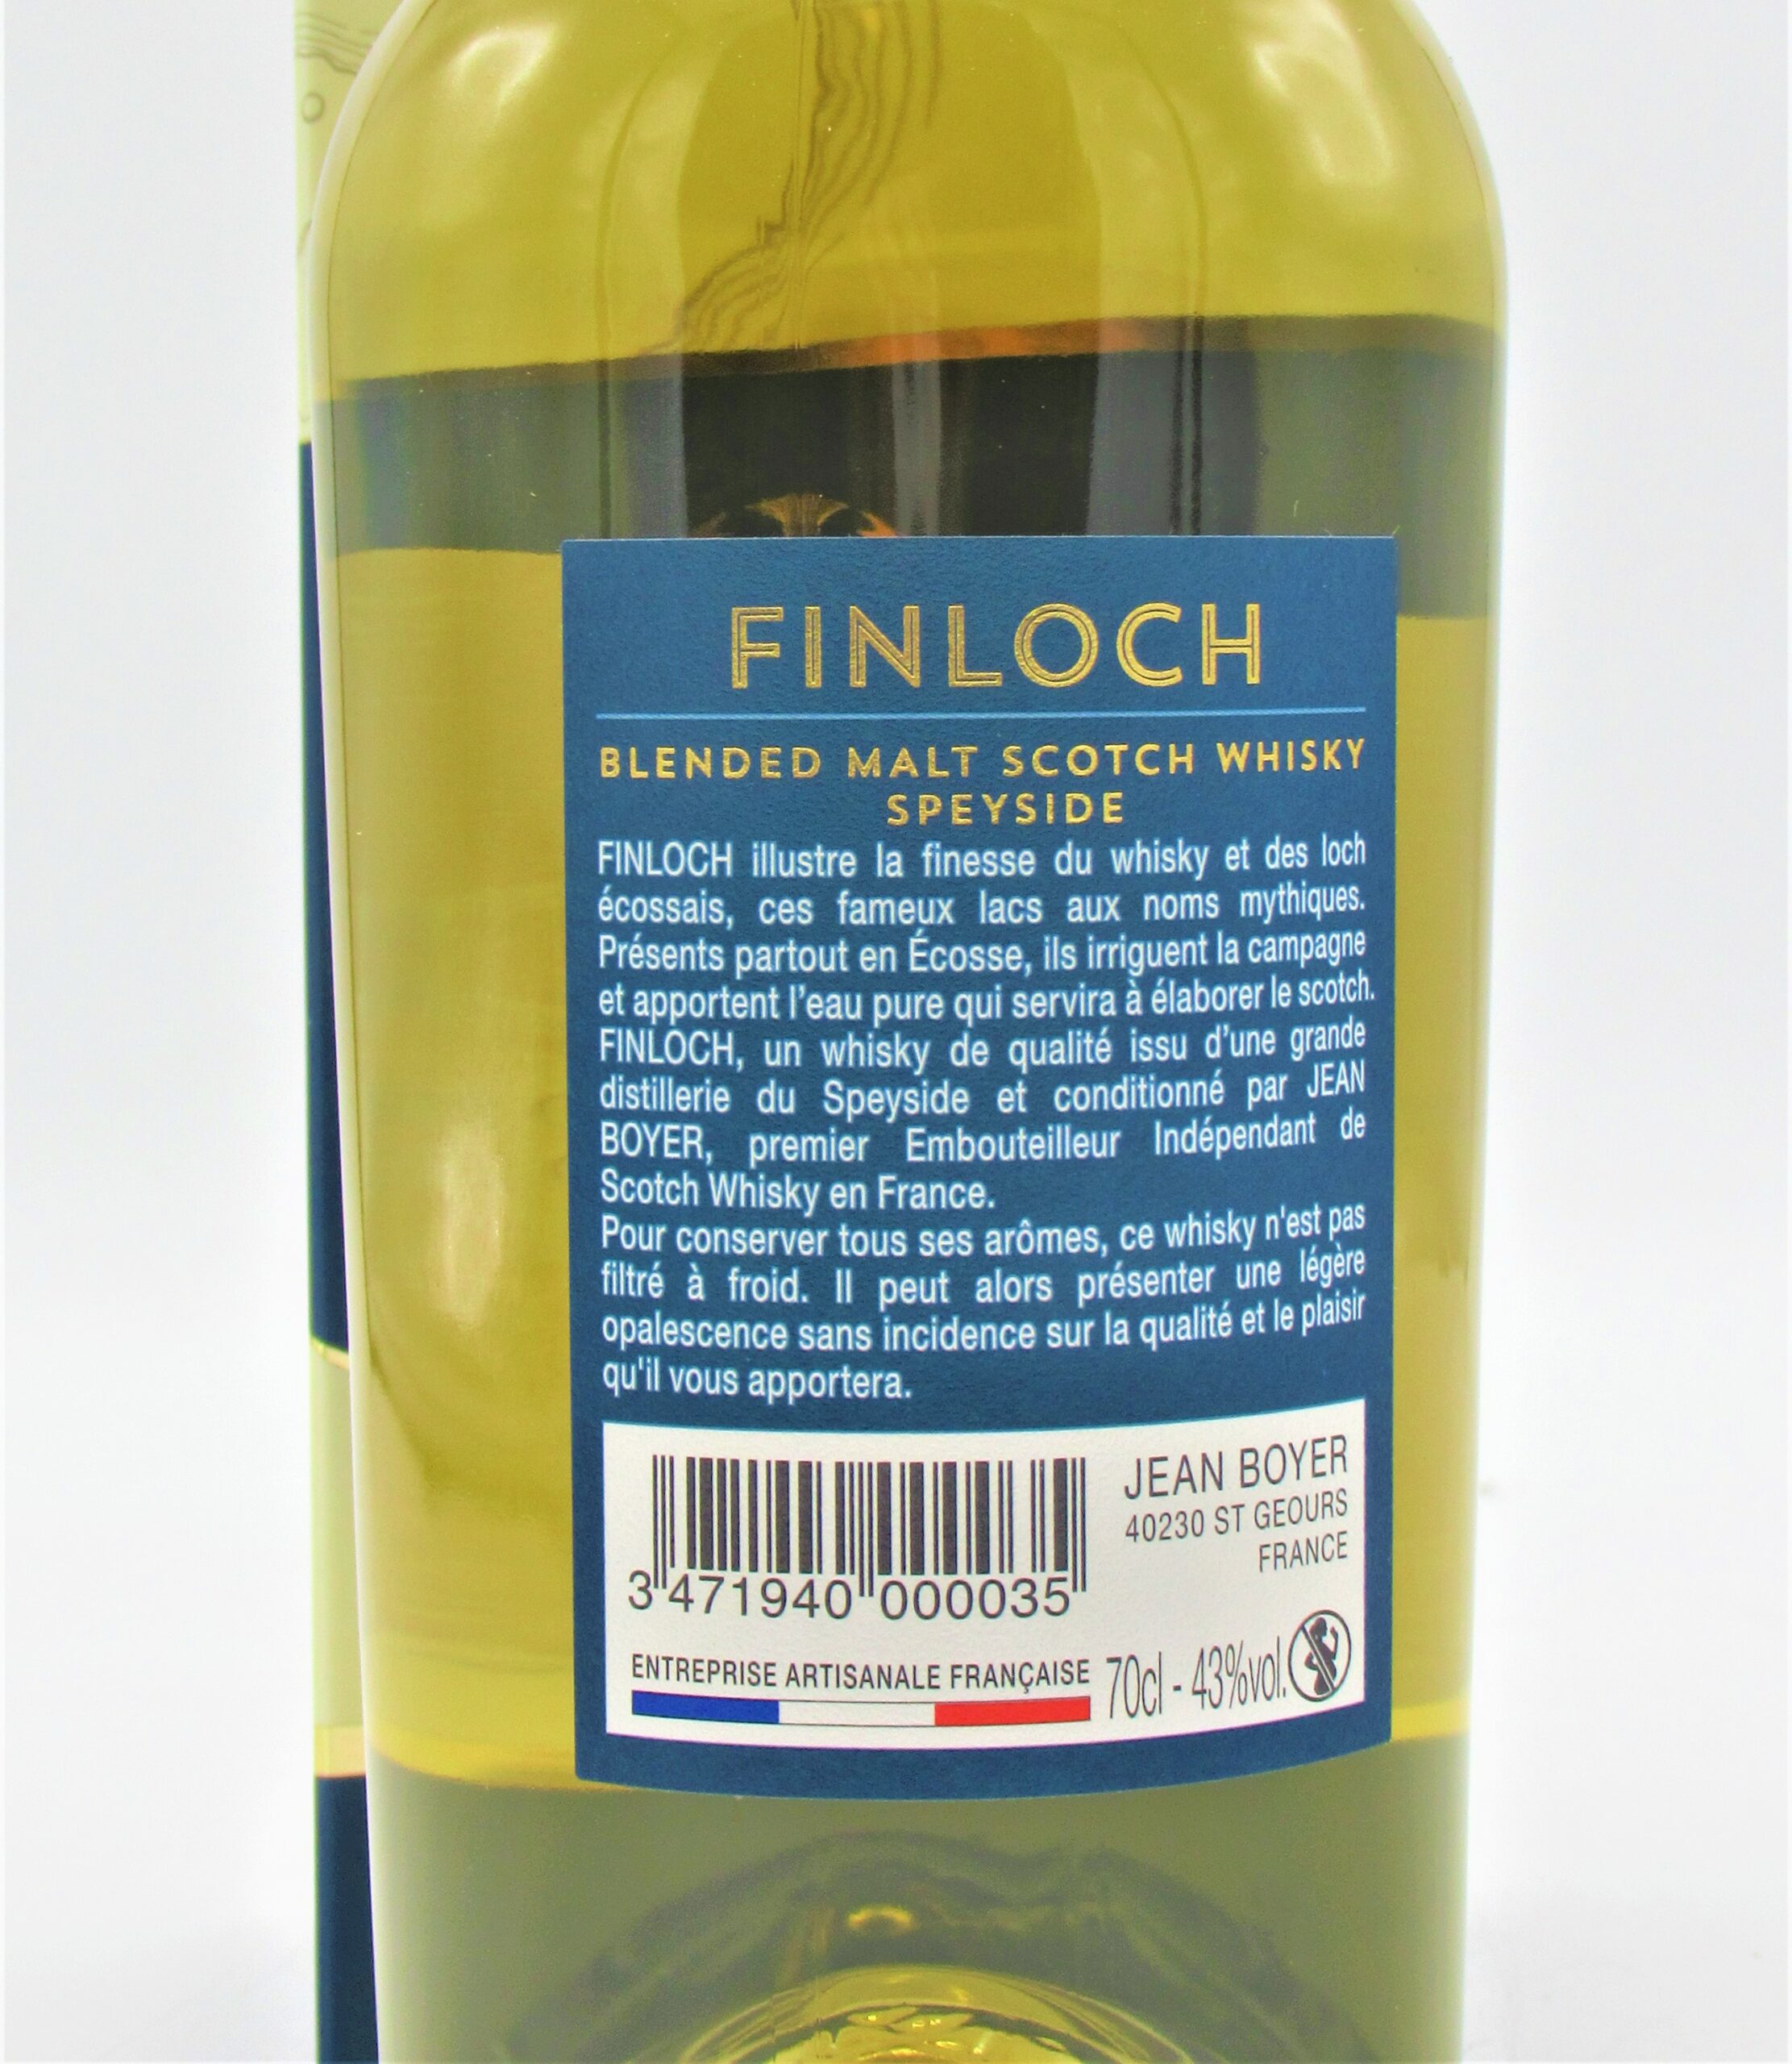 Blended Malt Scotch Whisky Finloch Peaty Speyside - La Cave Saint-Vincent